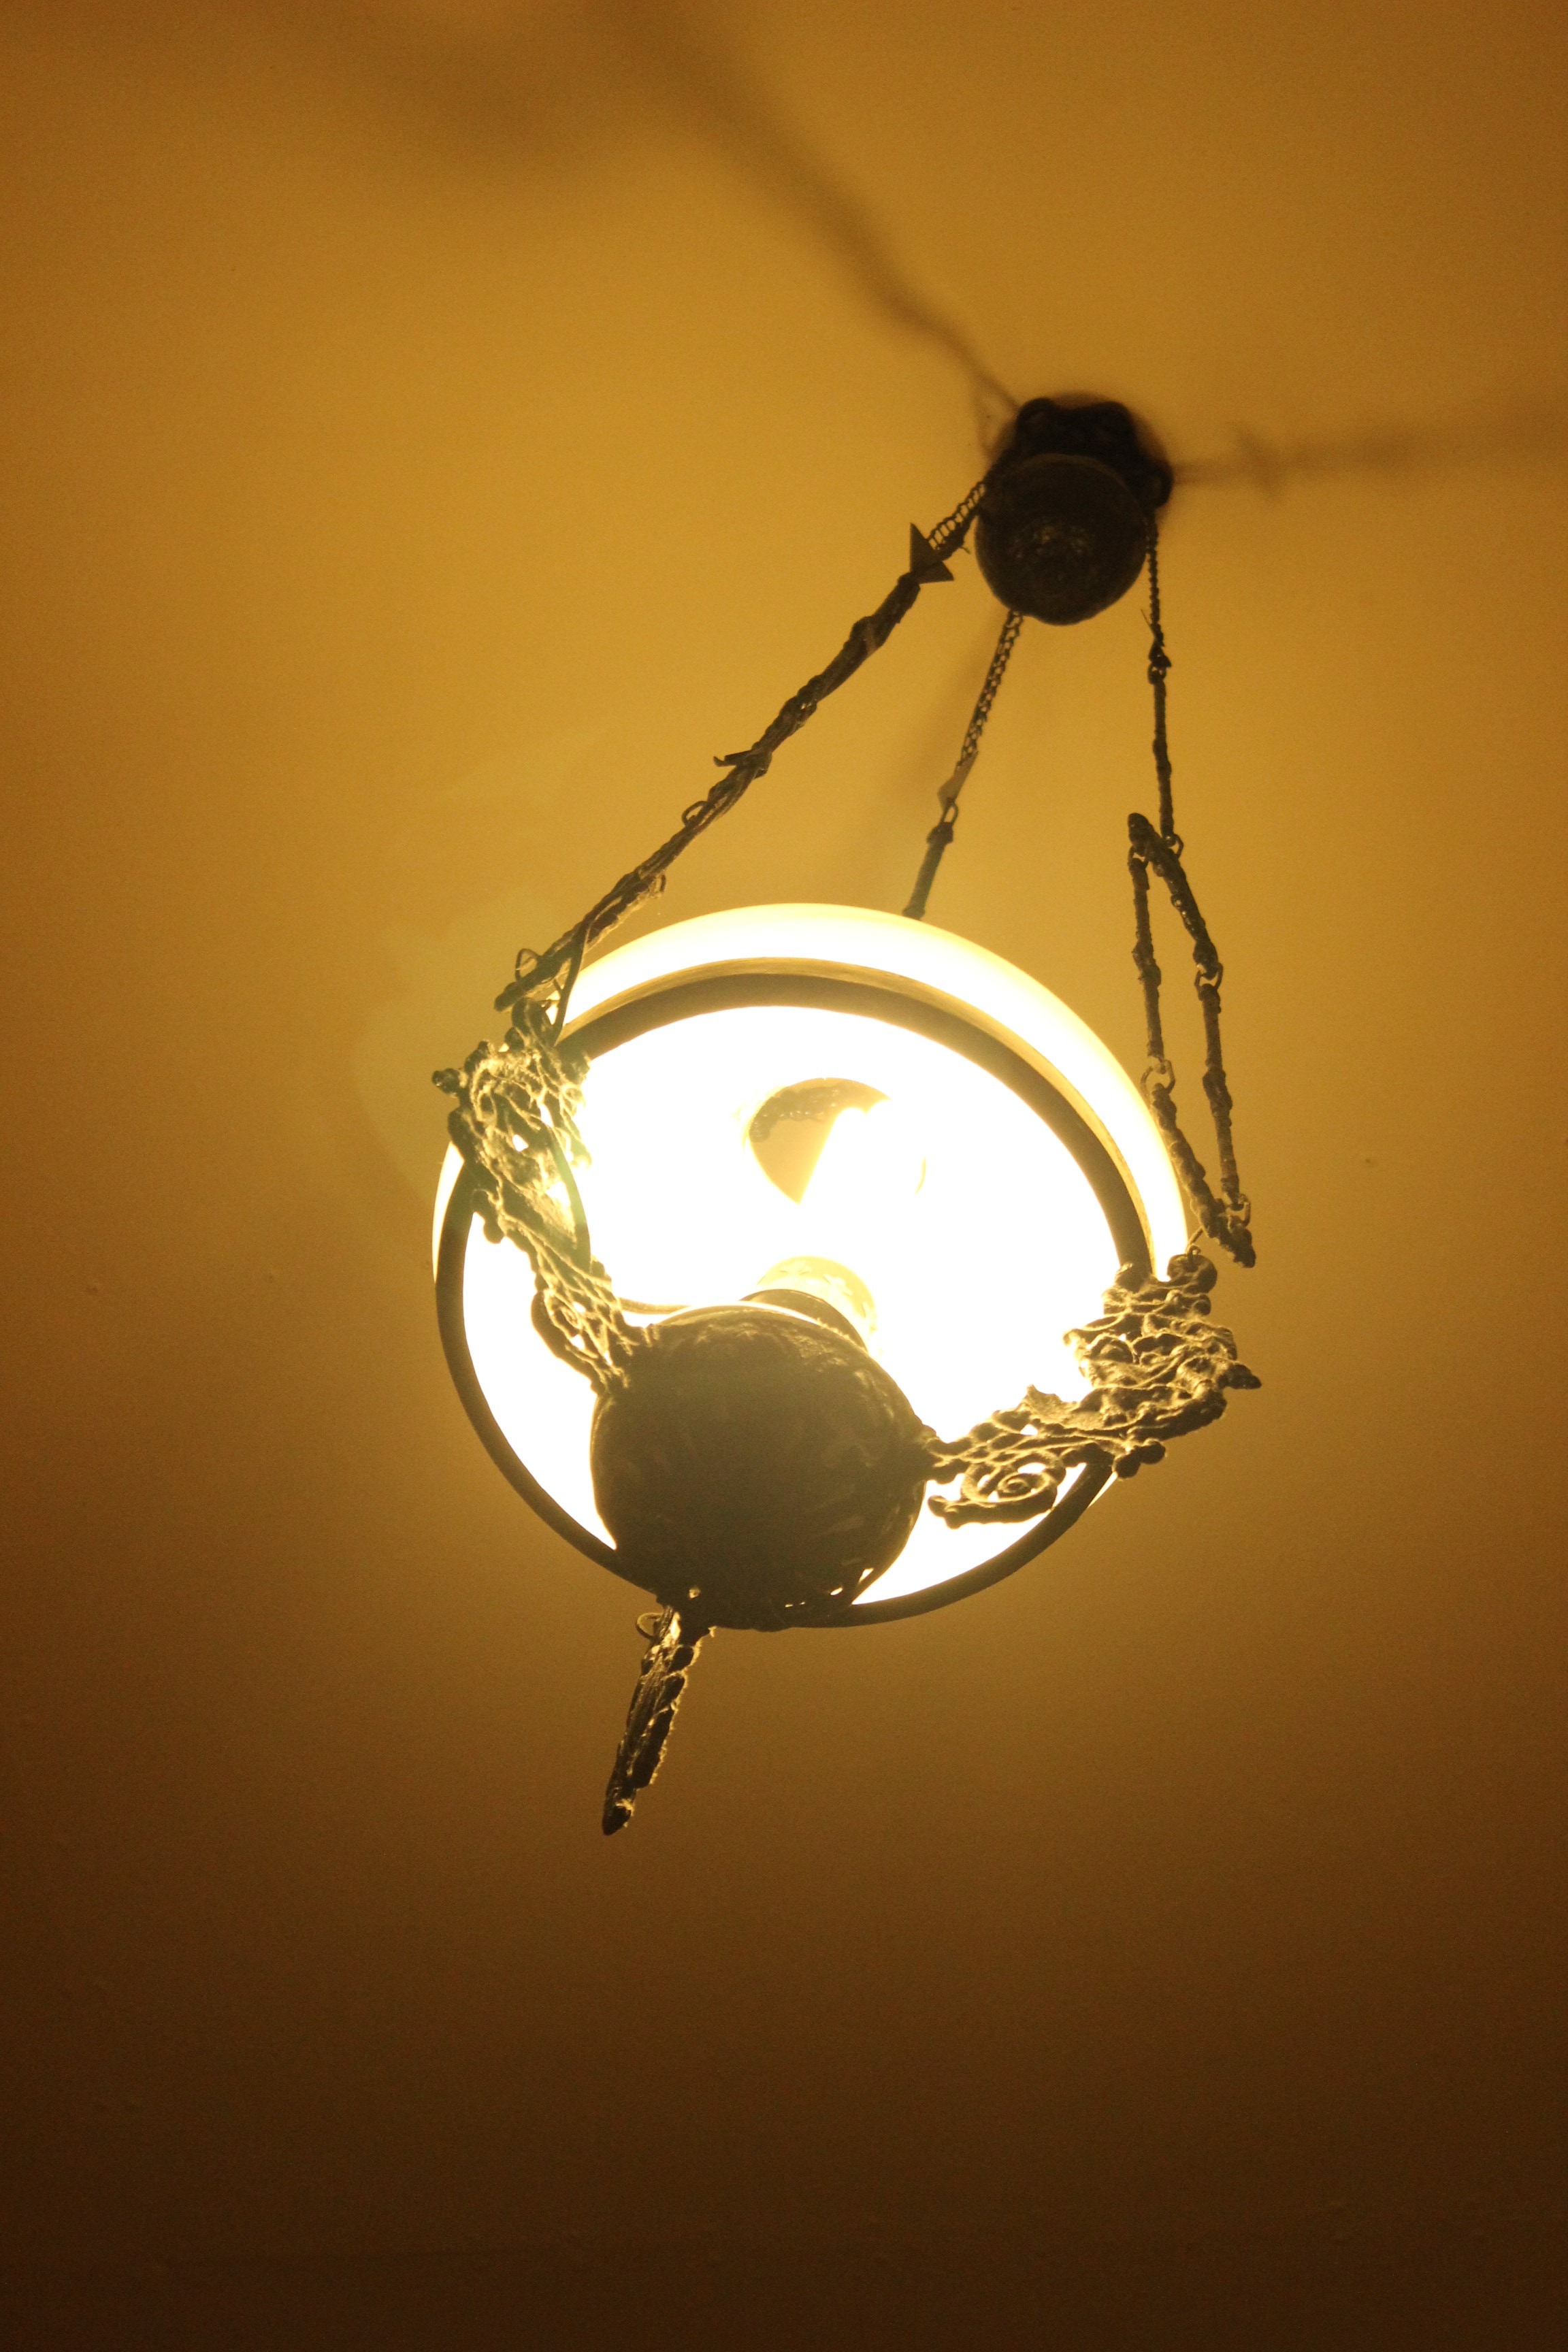 black metal frame pendant lamp creating shadow on ceiling